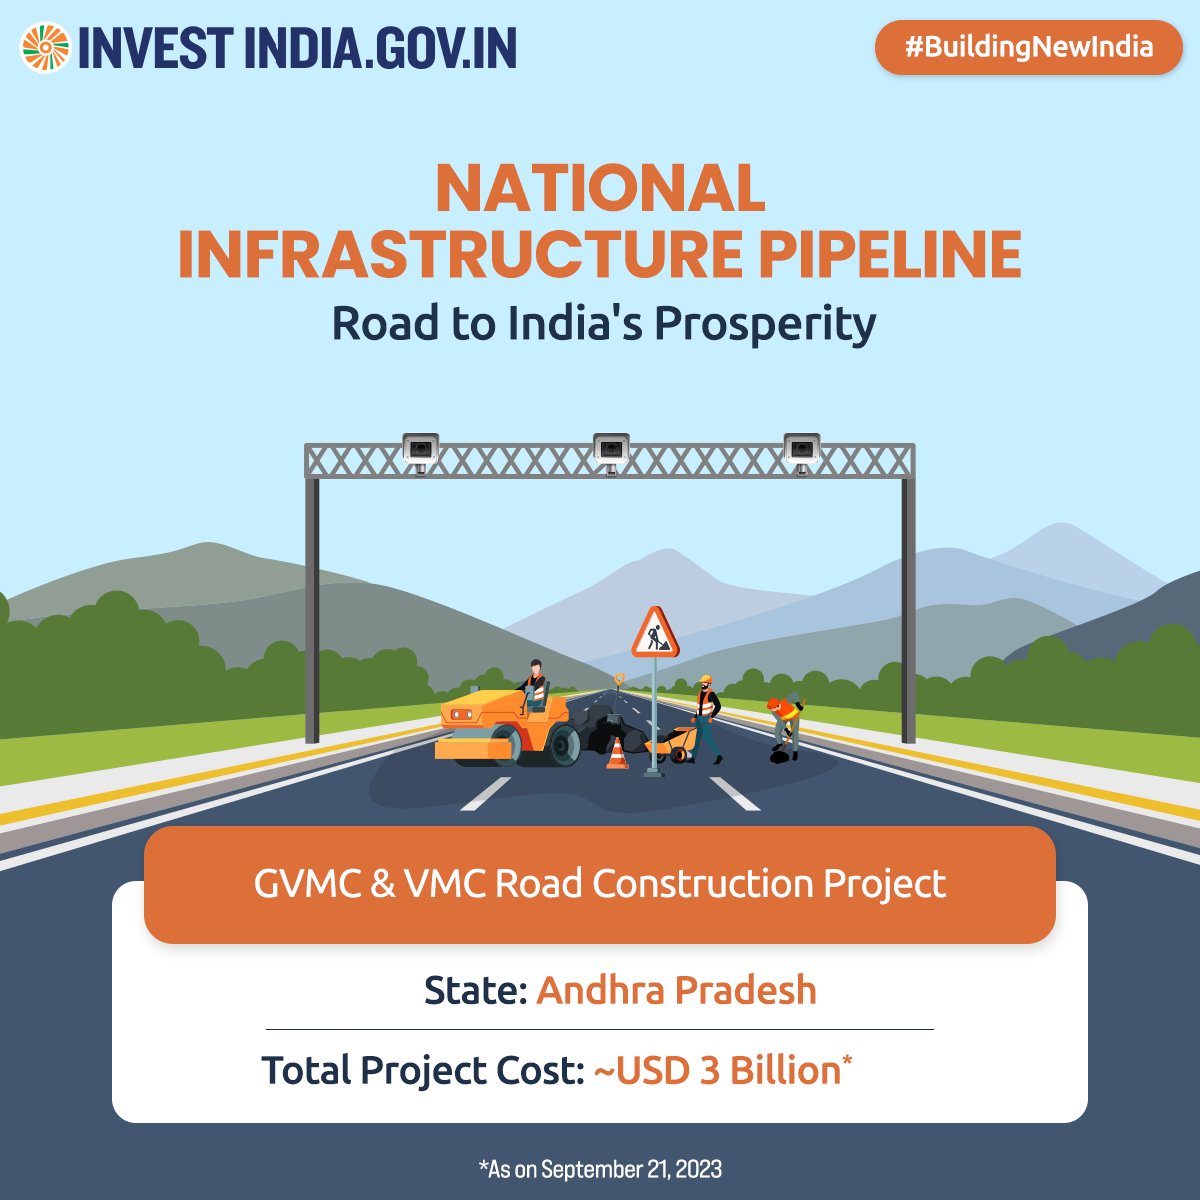 GVMC & VMC Road Construction Project under #NIP will build new roads, bridges, underpasses, and tunnels, ensuring smooth transportation in #AndhraPradesh

Know more: bit.ly/page_NIP

#BuildingNewIndia #InvestInIndia #NationalInfrastructurePipeline #InvestInAndhraPradesh